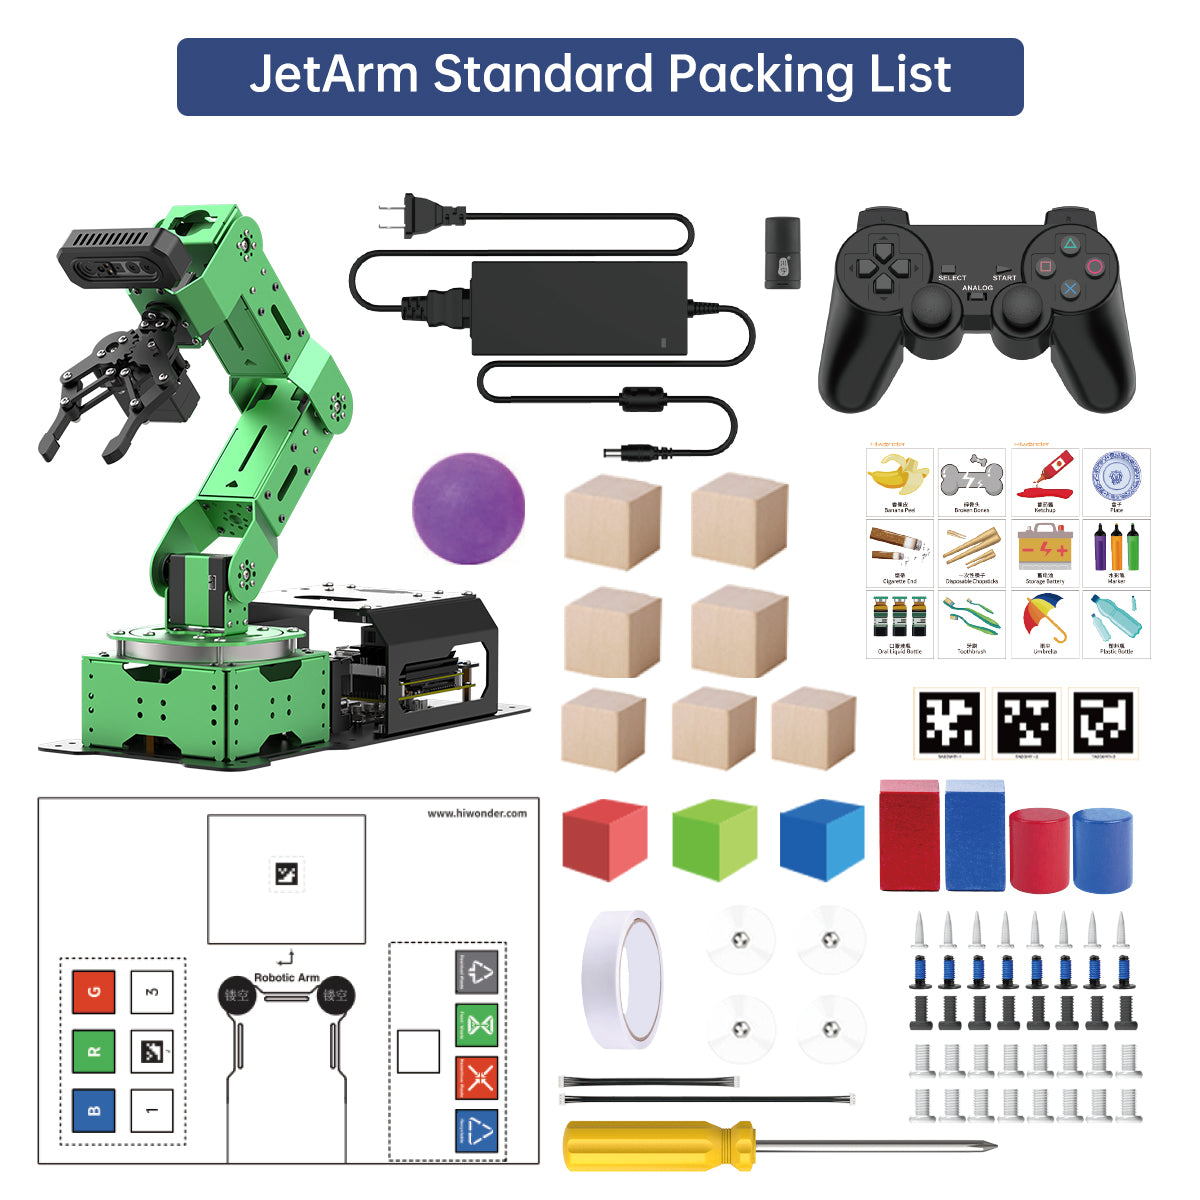 JetArm JETSON NANO Robot Arm ROS Open Source Vision Recognition Program Robot